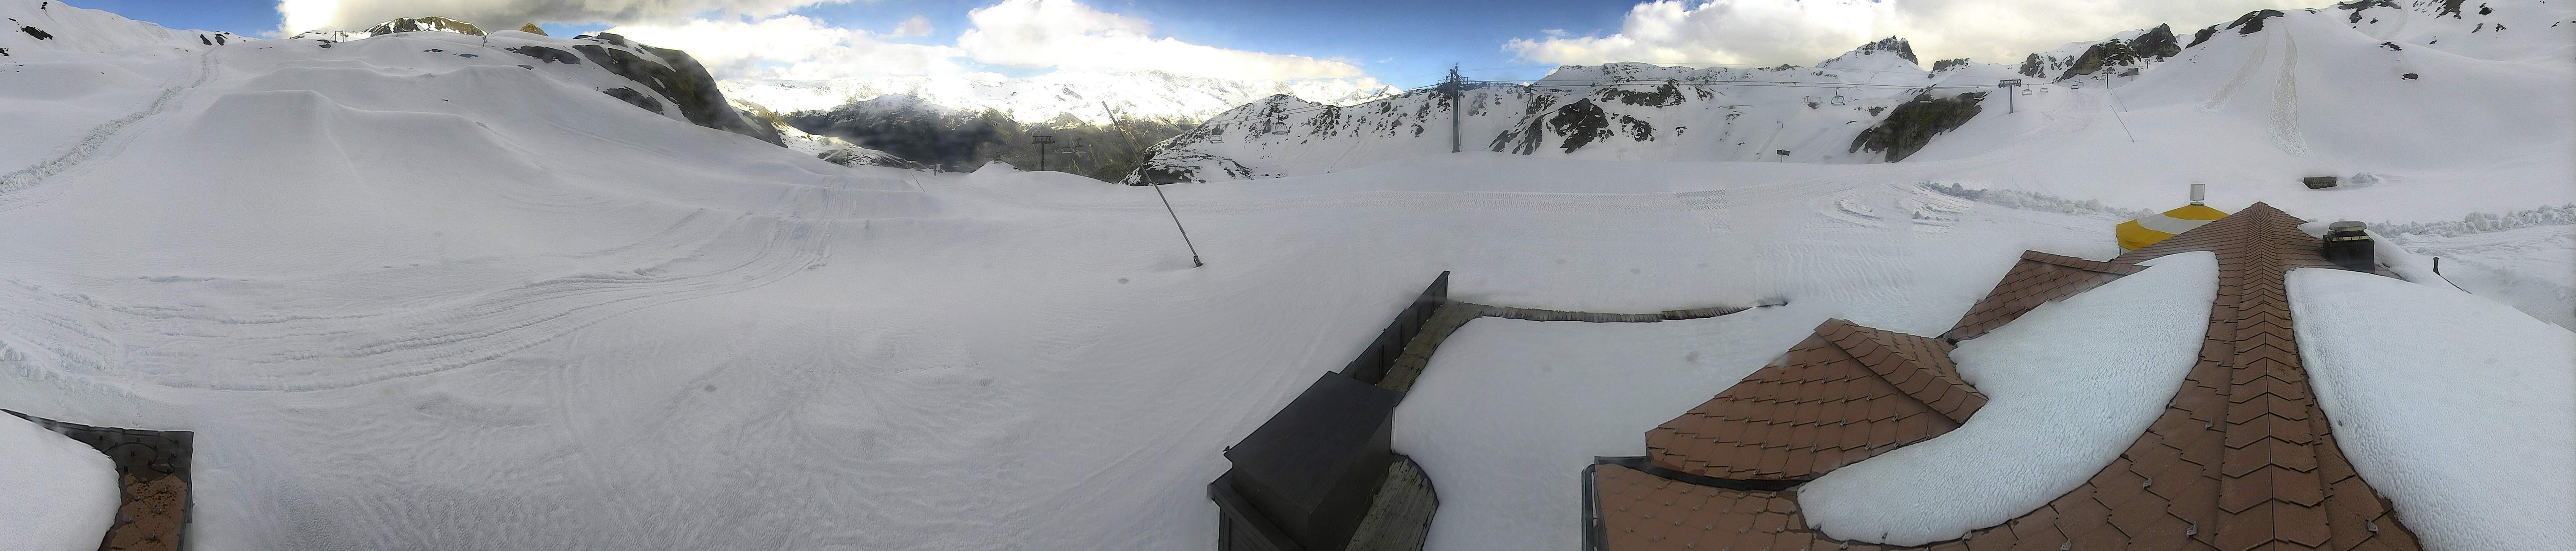 Grimentz - Bendolla, buvette Orzival, domaine
skiable - Skigebiet - Ski slopes